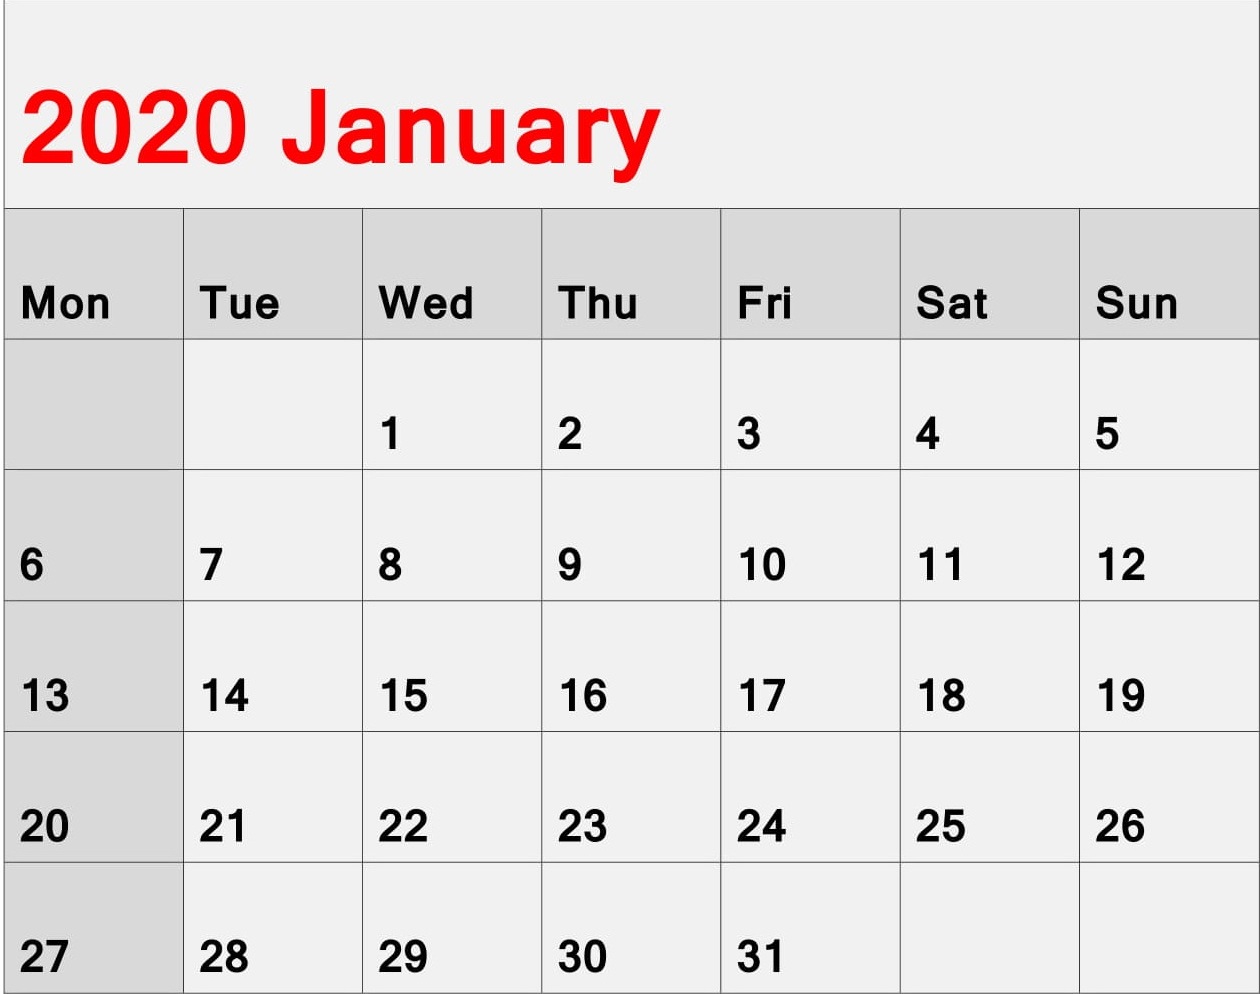 Printable Calendar January 2020